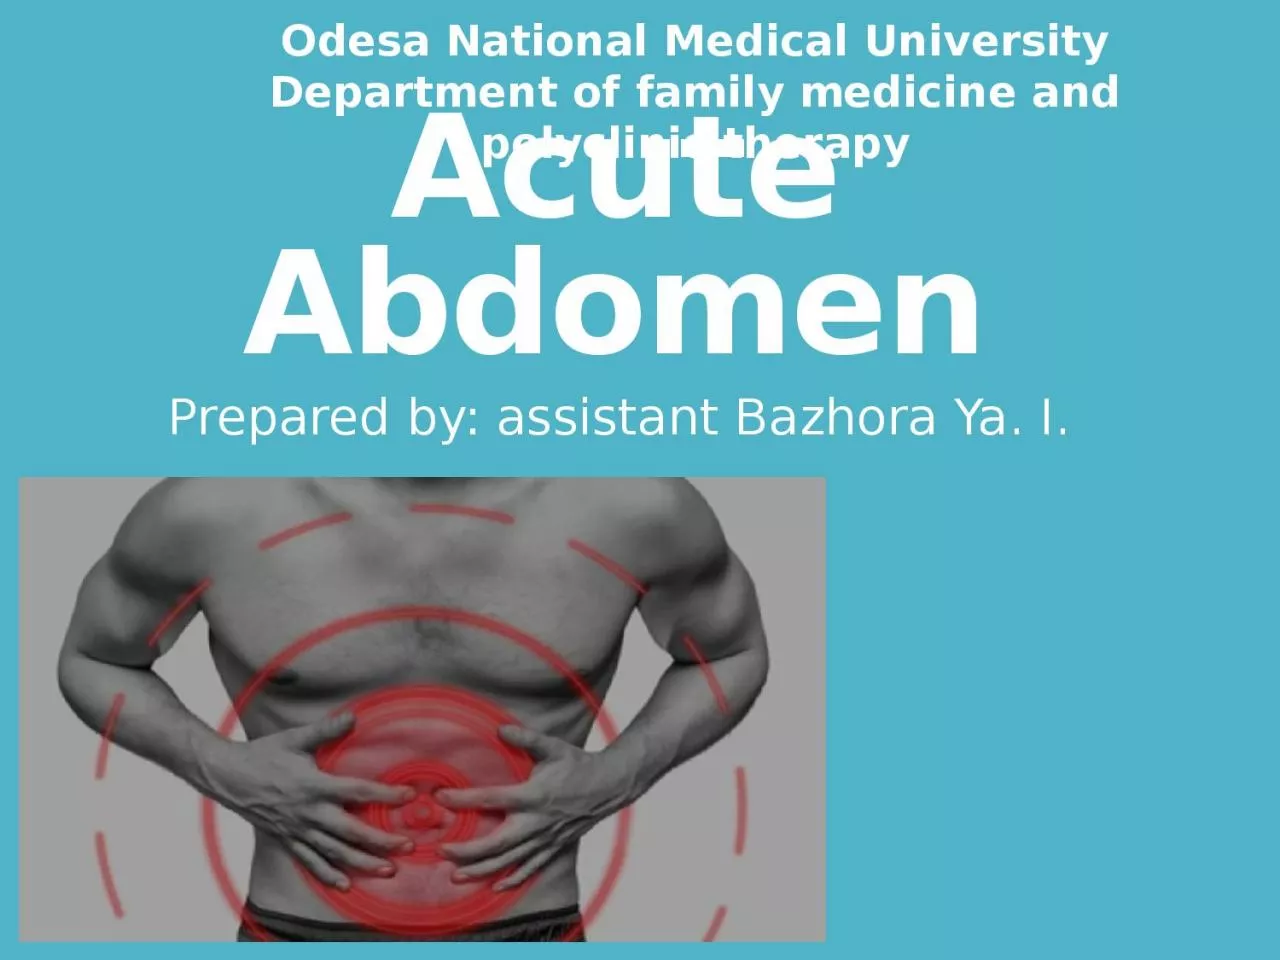 Acute Abdomen Prepared by: assistant